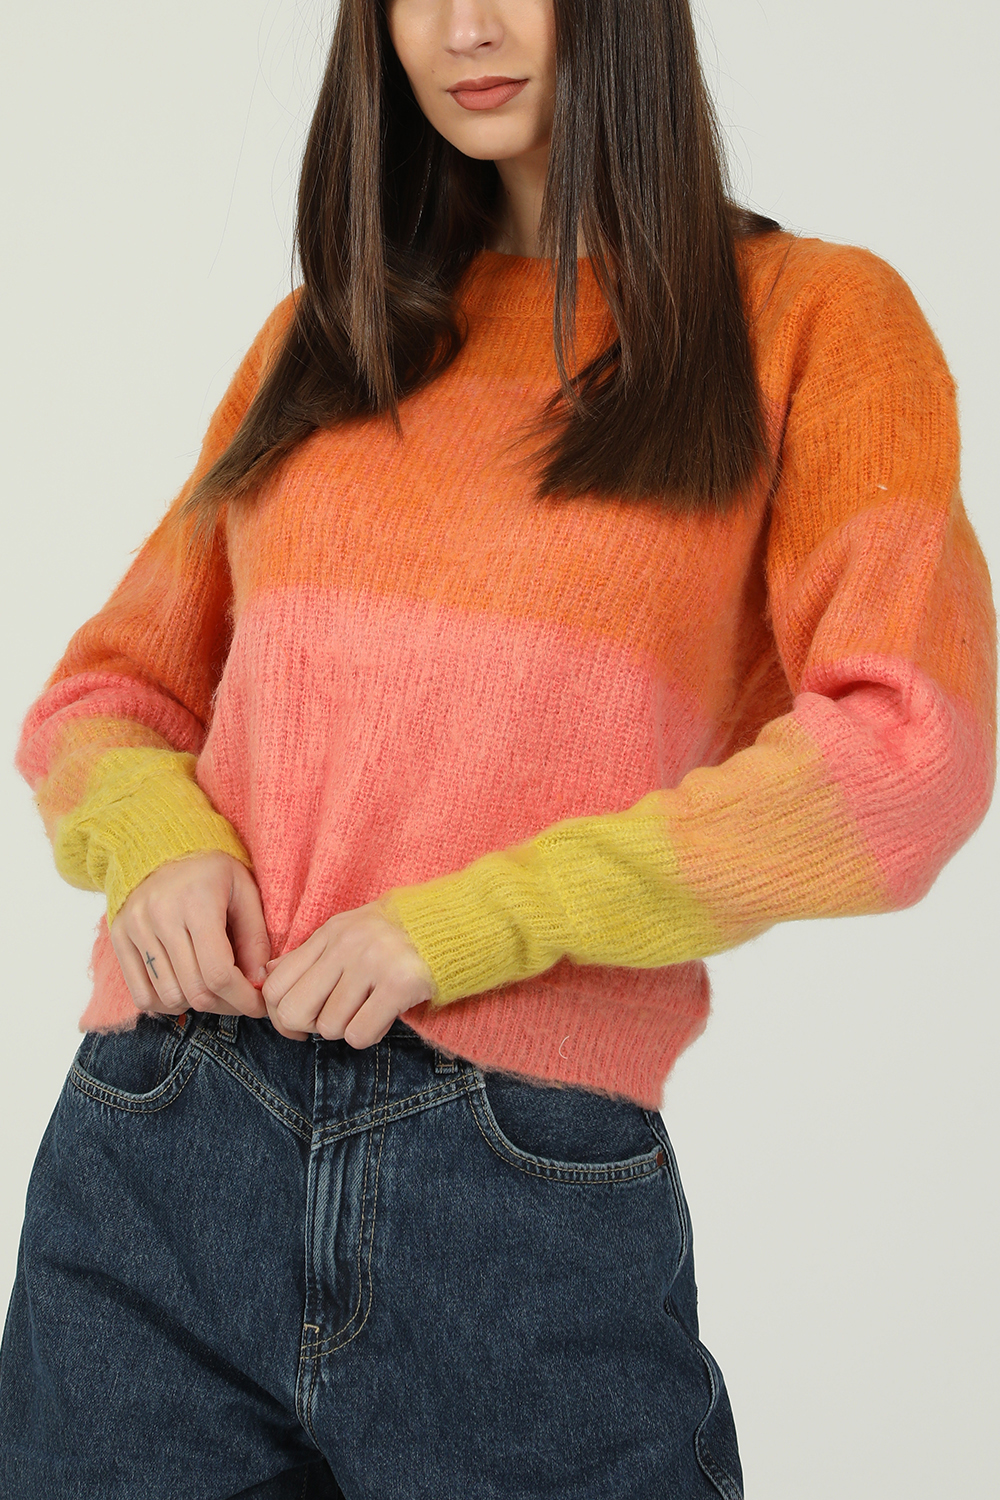 FREE PEOPLE COLLECTION – Γυναικείο πουλόβερ FREE PEOPLE πορτοκαλί ροζ κίτρινο 1825870.0-00O3